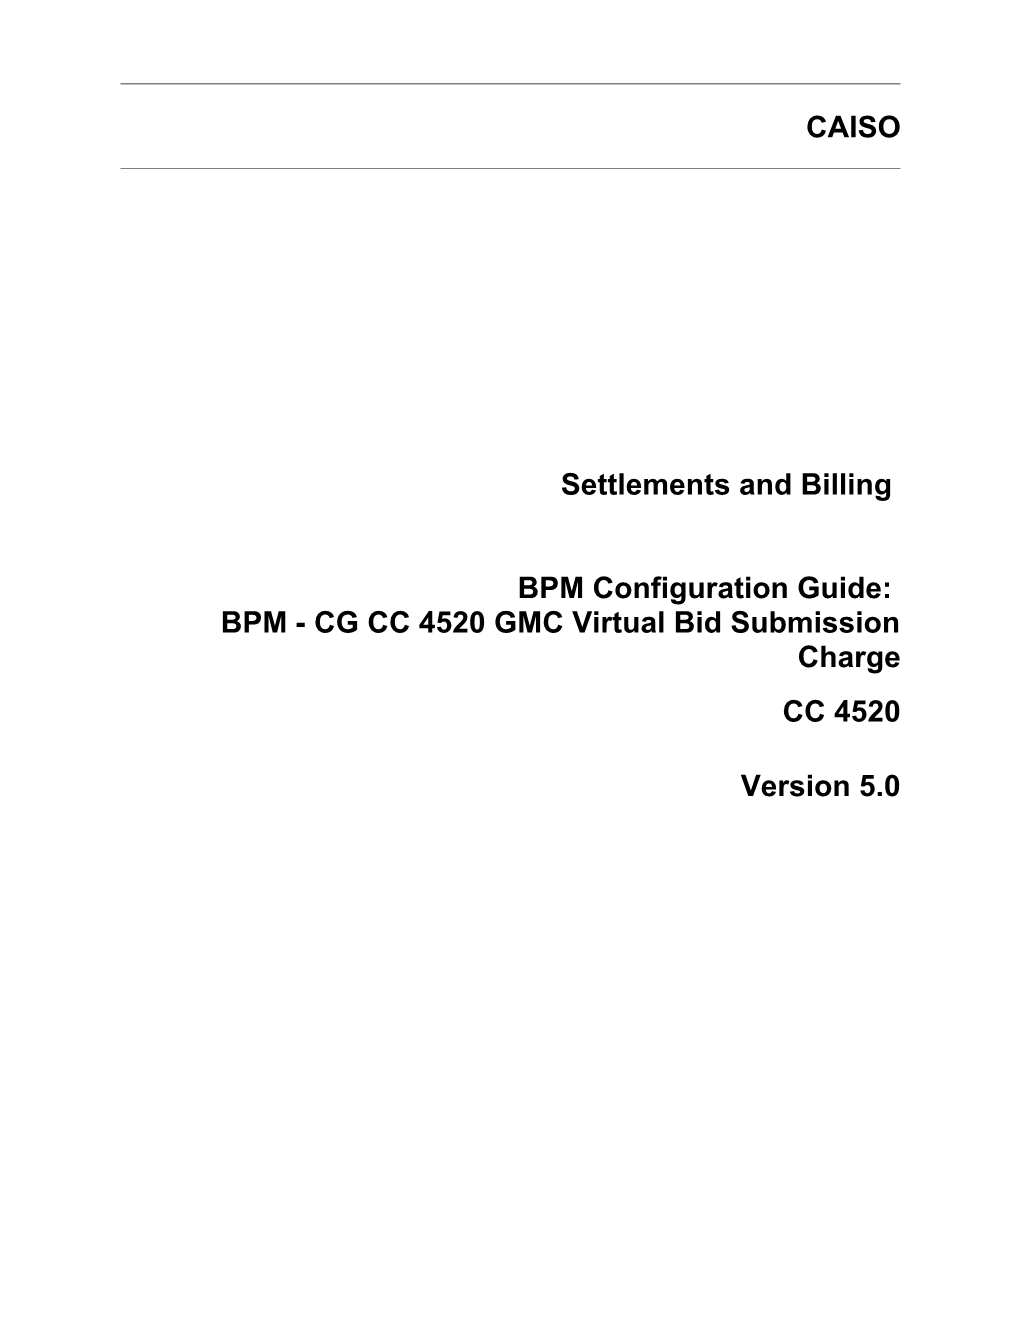 BPM - CG CC 4520 GMC Virtual Bid Submission Charge